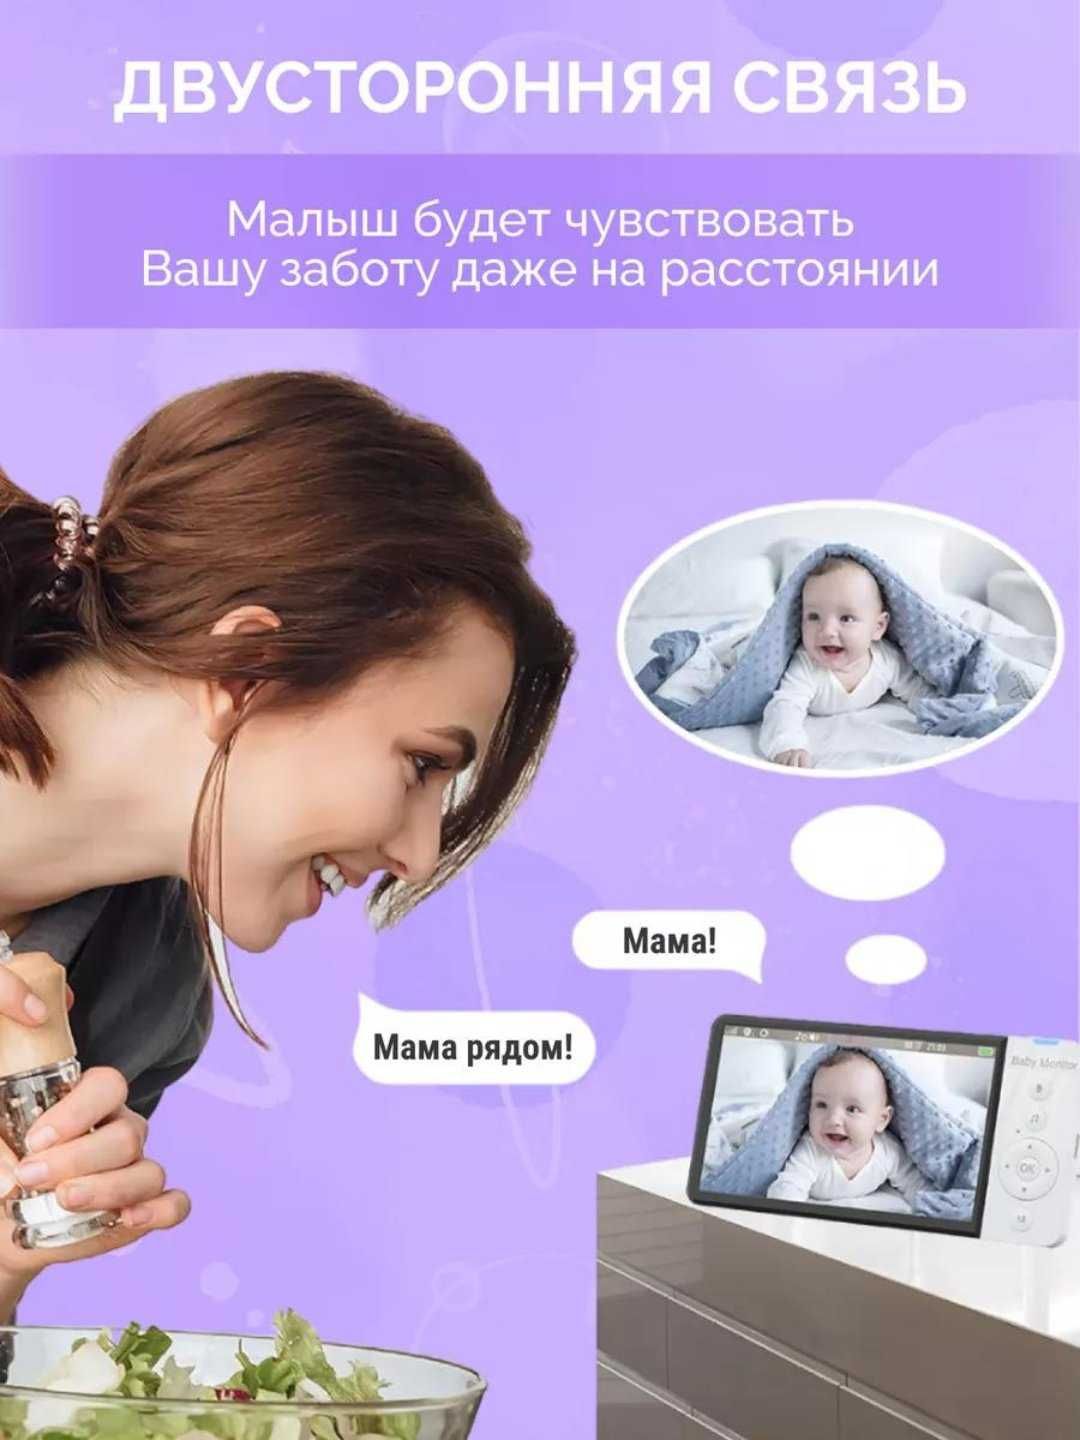 Baby Monitor - Видео няня 360 градусов вращение - 5 дюйм дисплей